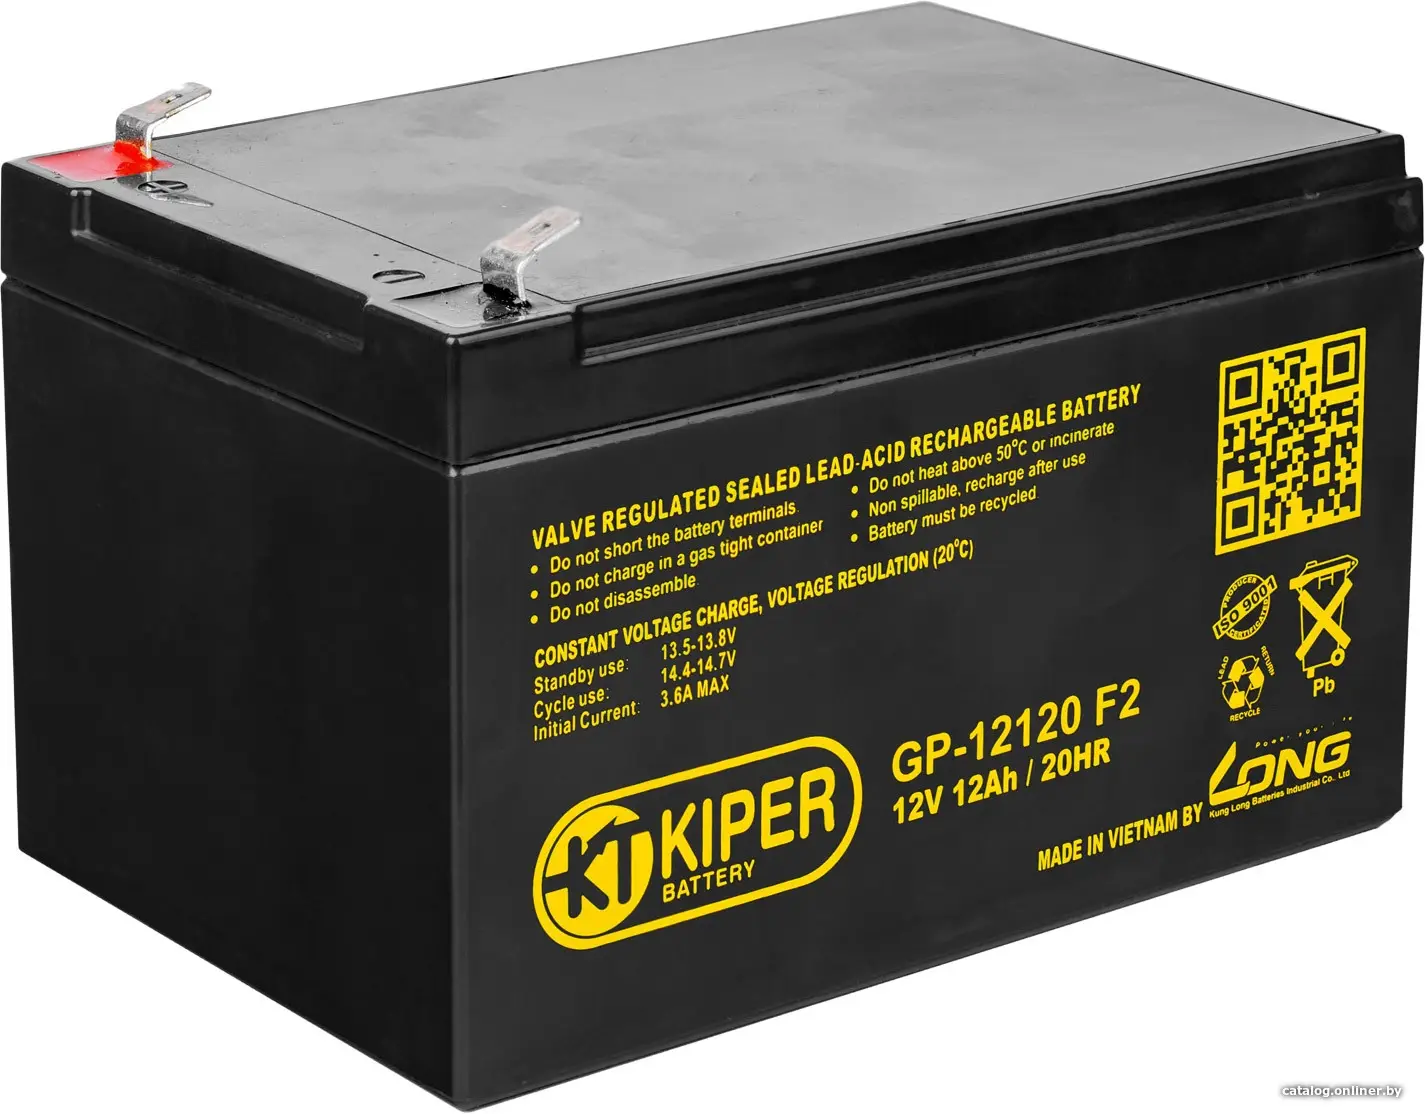 Купить Аккумуляторная батарея Kiper GP-12120 F2 12V/12Ah, цена, опт и розница